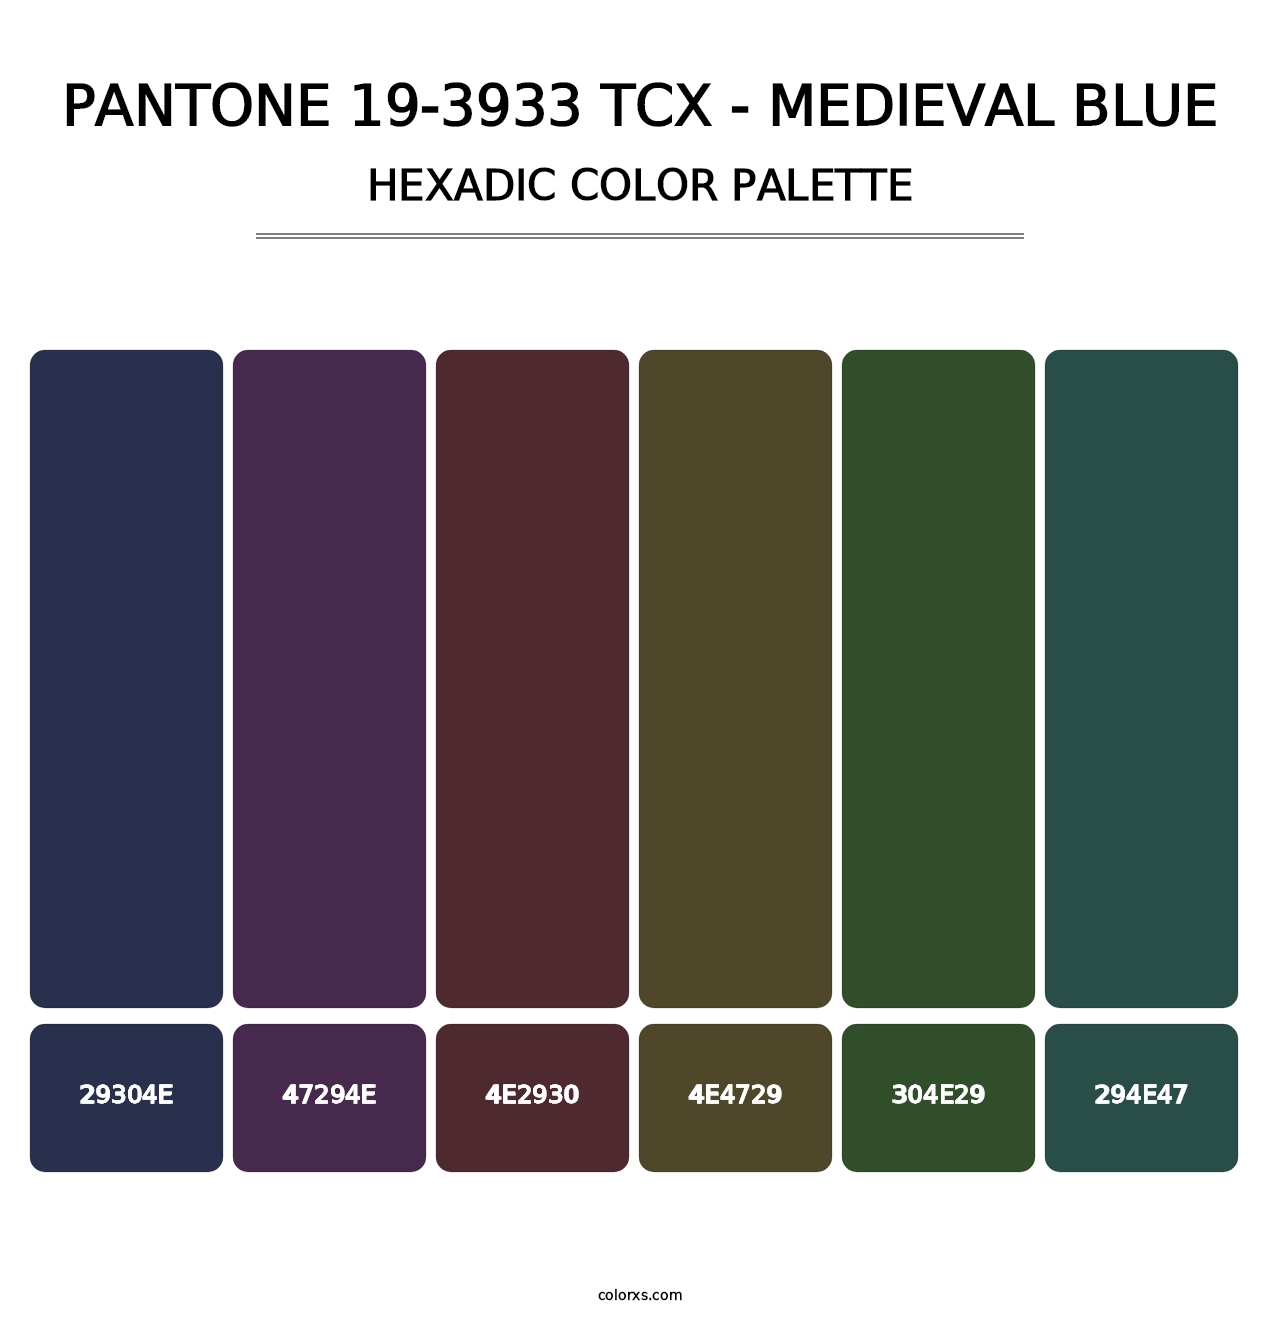 PANTONE 19-3933 TCX - Medieval Blue - Hexadic Color Palette